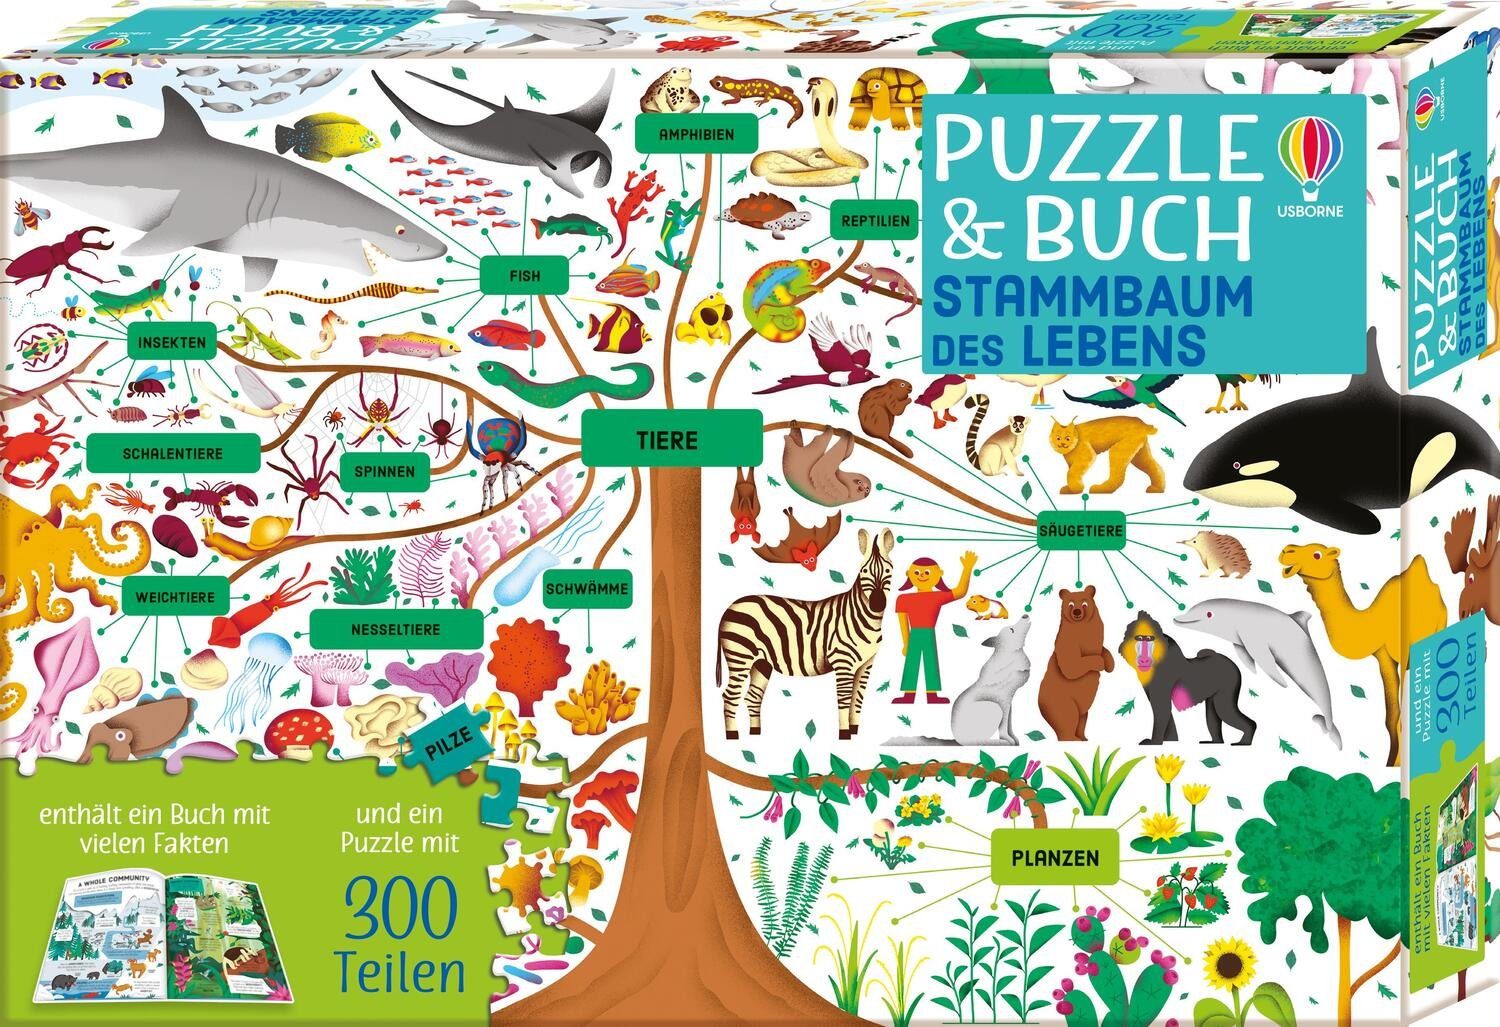 Usborne Verlag Puzzle Puzzle & Buch: Stammbaum des Lebens, 300 Puzzleteile